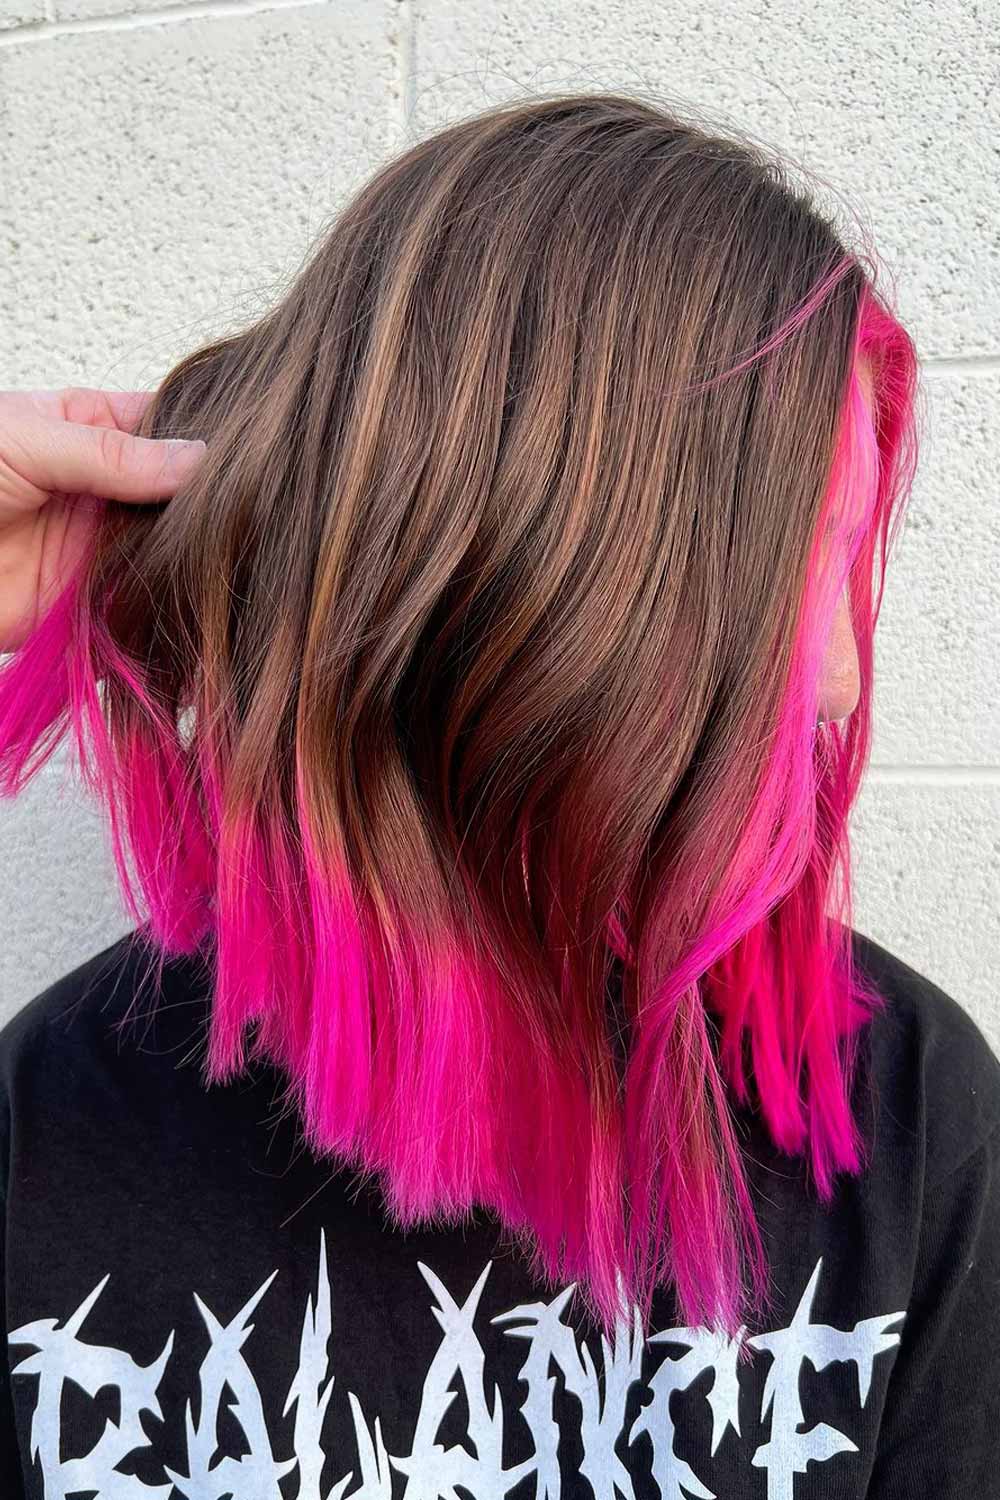 Barbie Look with Pink Dip Dyeing Short Hair